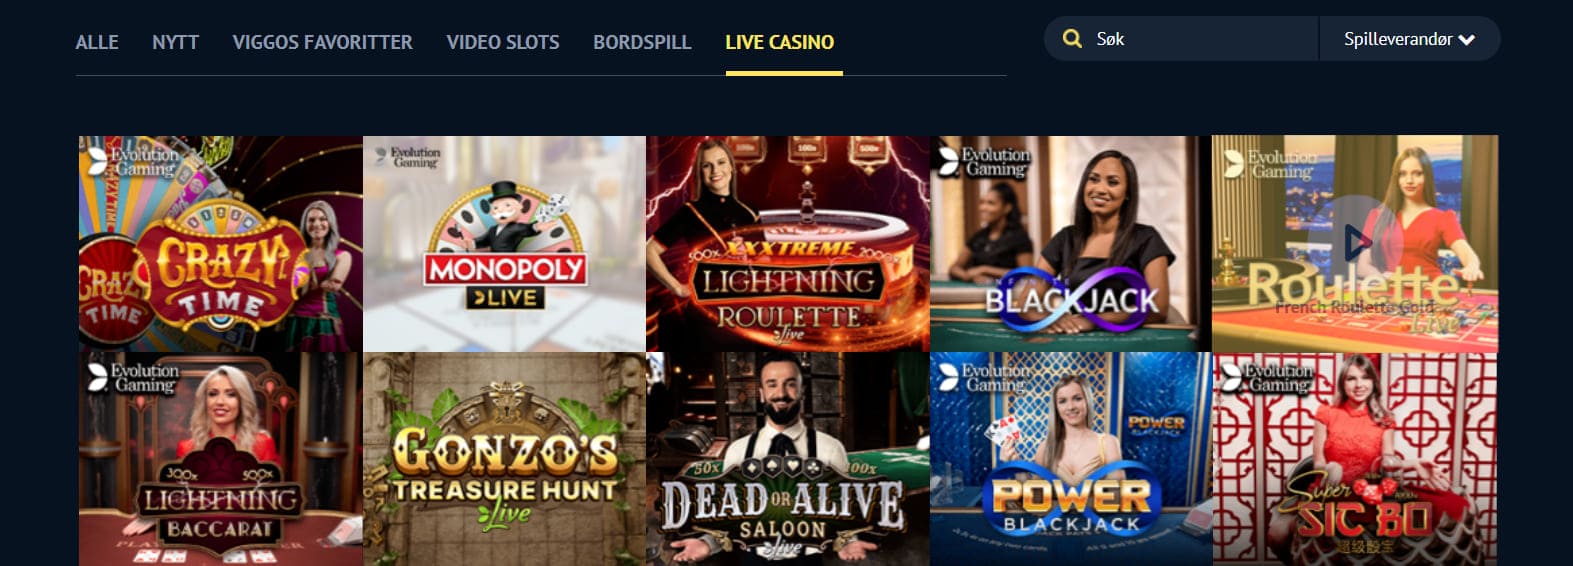 viggoslots casino live